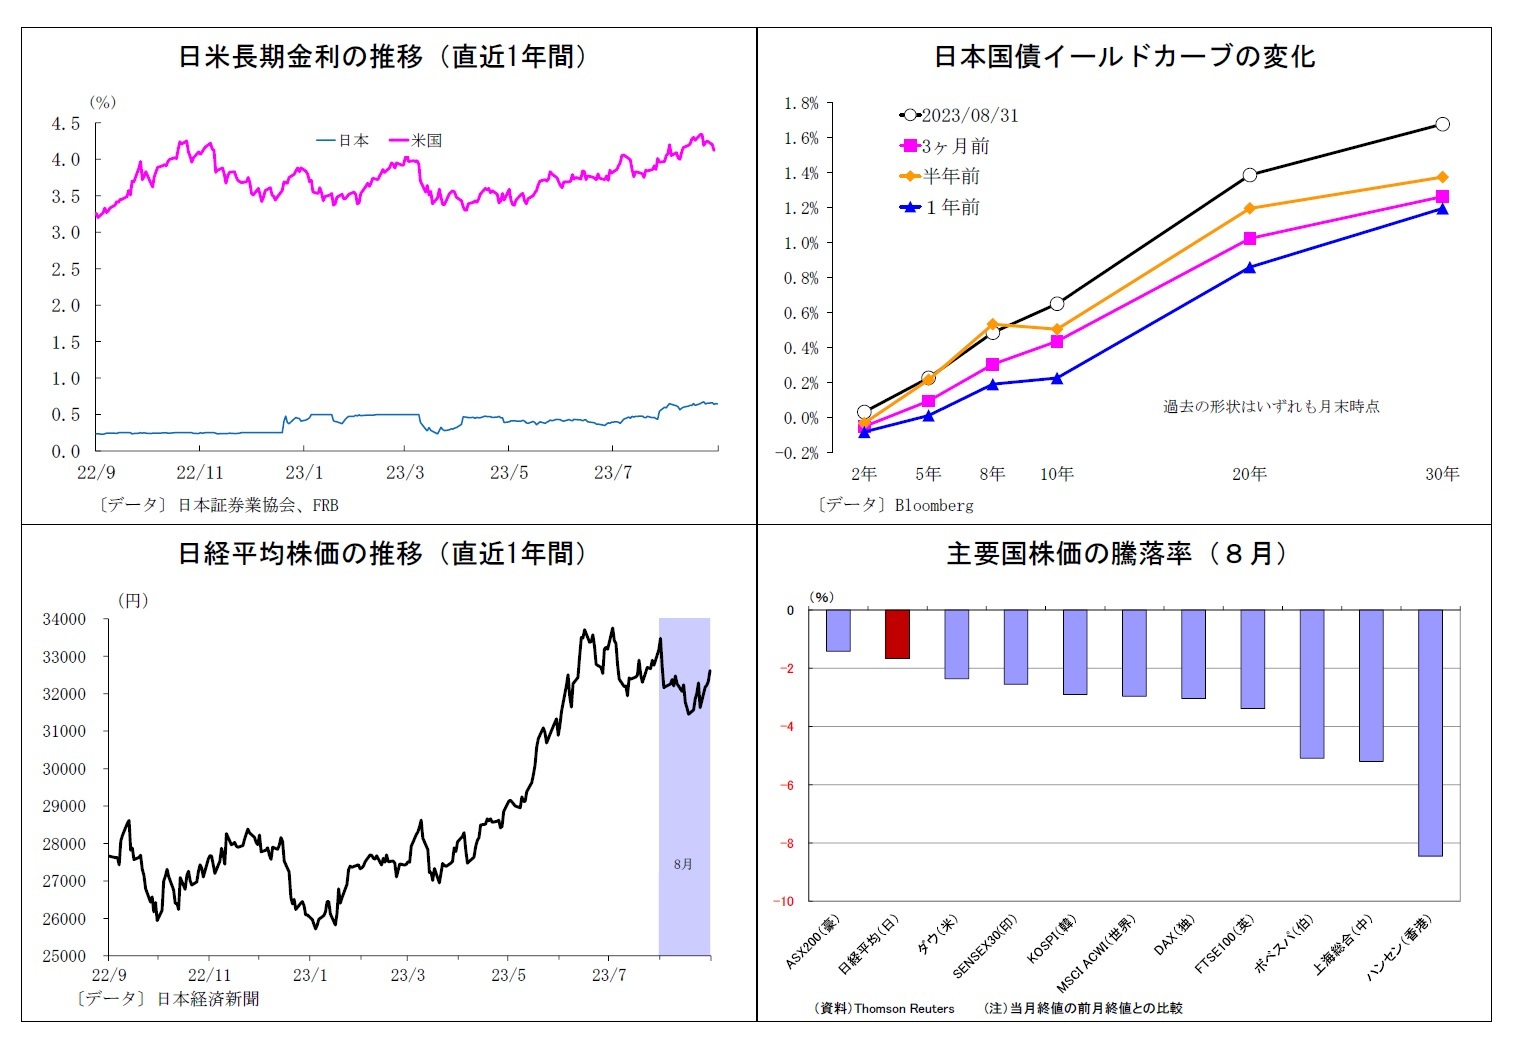 日米長期金利の推移（直近1年間）/日本国債イールドカーブの変化/日経平均株価の推移（直近1年間）/主要国株価の騰落率（８月）